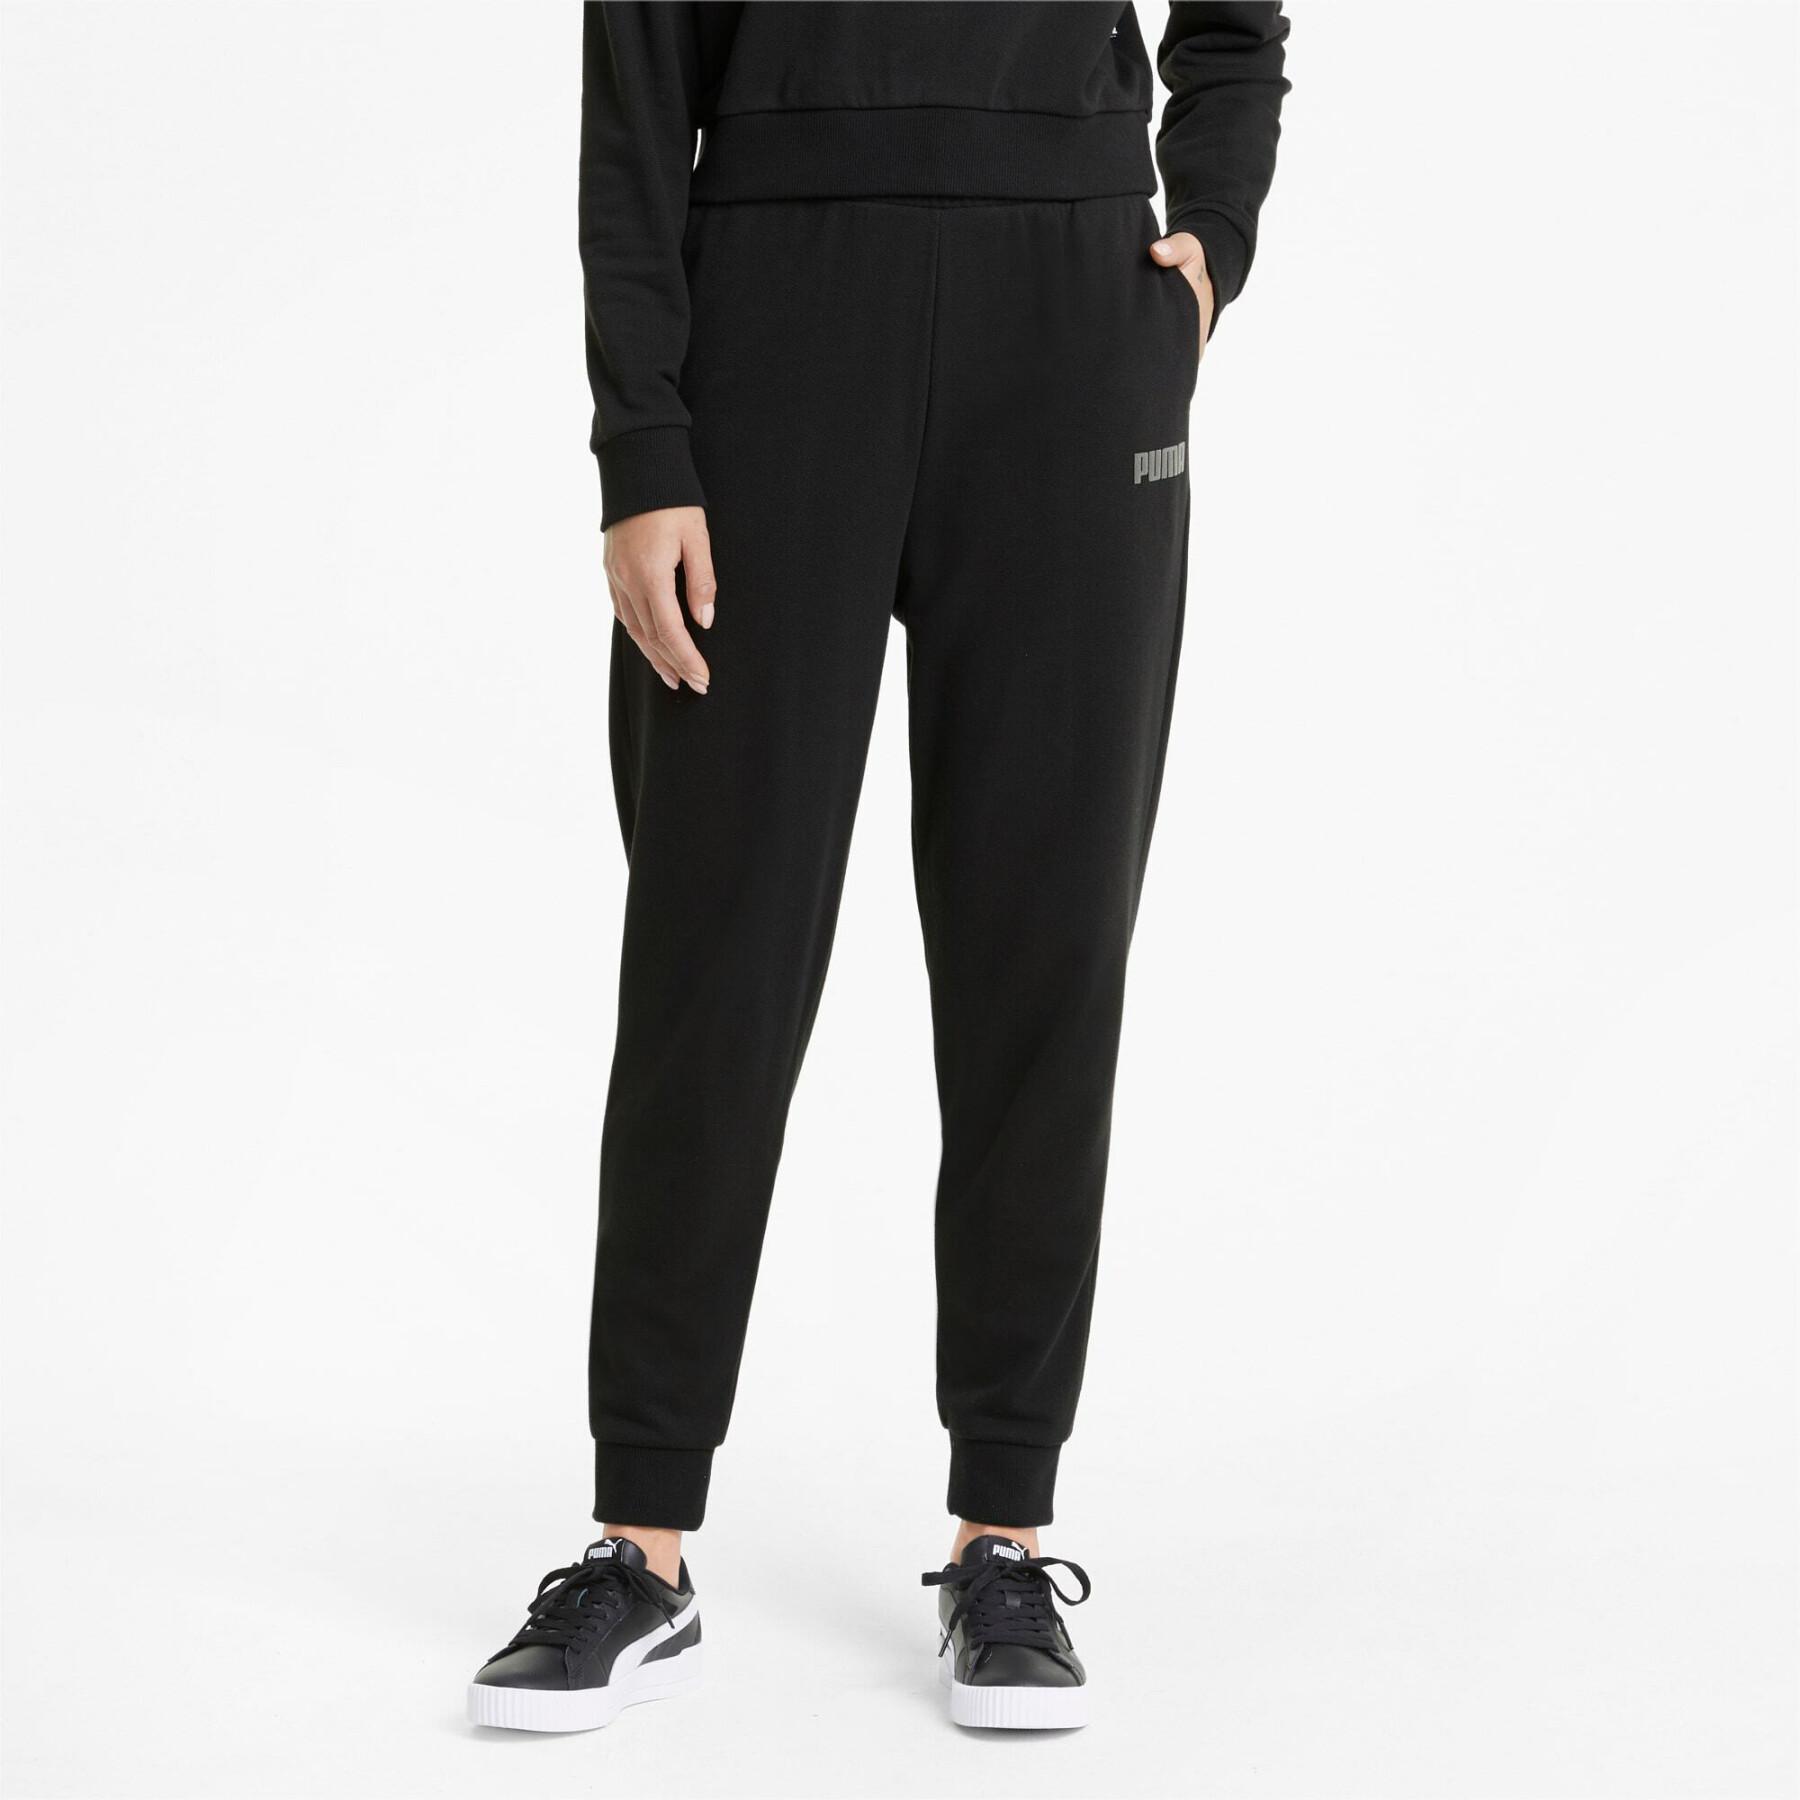 Aanvulling zijde verjaardag Women's jogging suit Puma Modern - Pants - Lifestyle Woman - Lifestyle